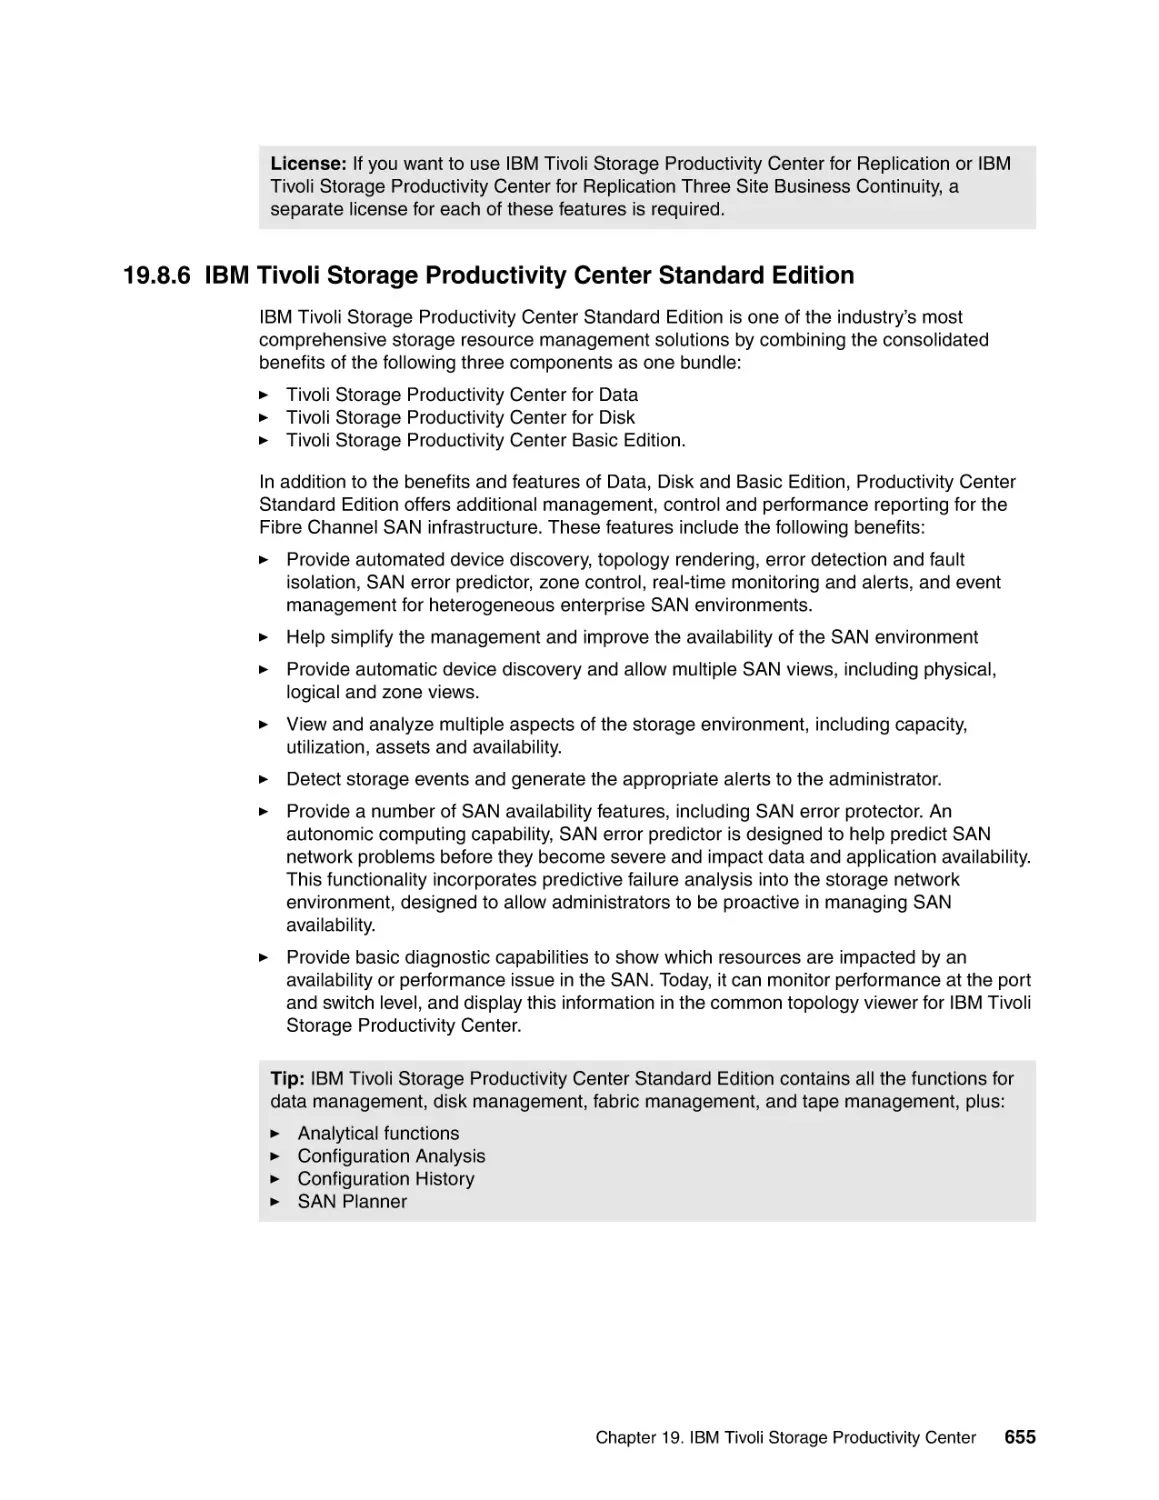 19.8.6 IBM Tivoli Storage Productivity Center Standard Edition